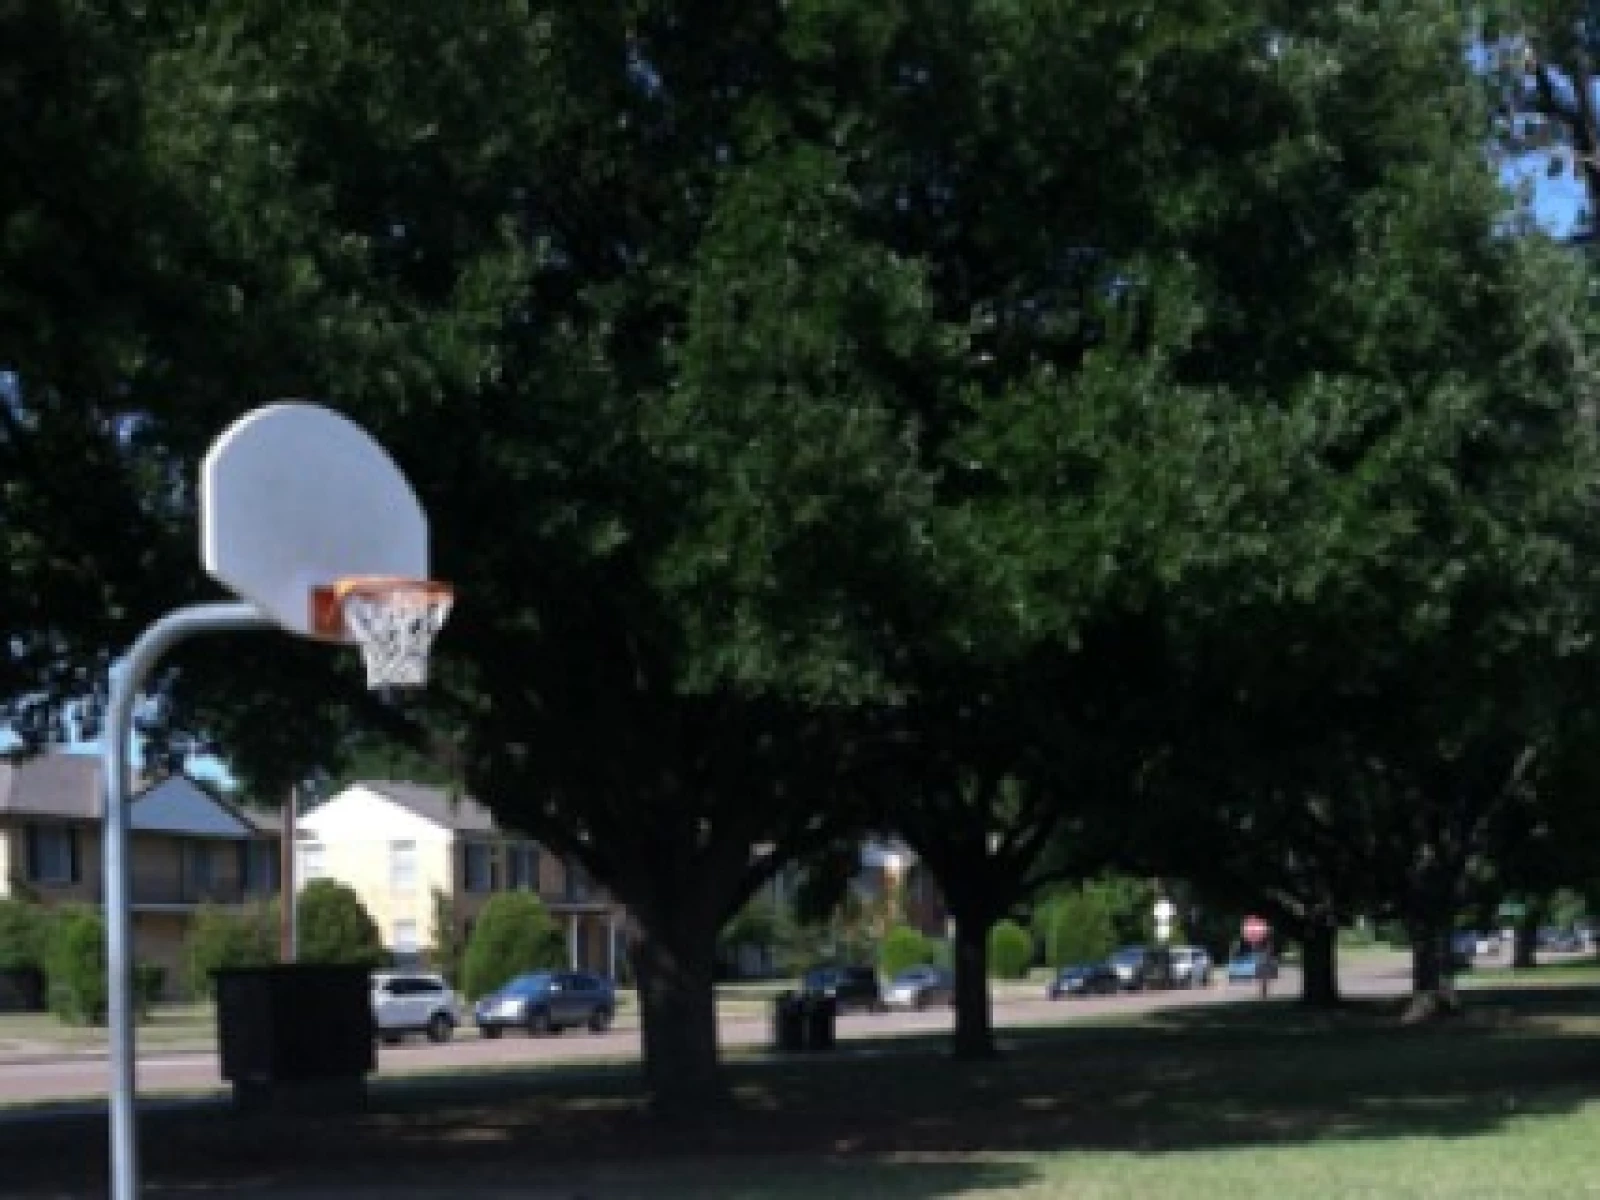 Dallas TX Basketball Court: Glencoe Park Courts of the World